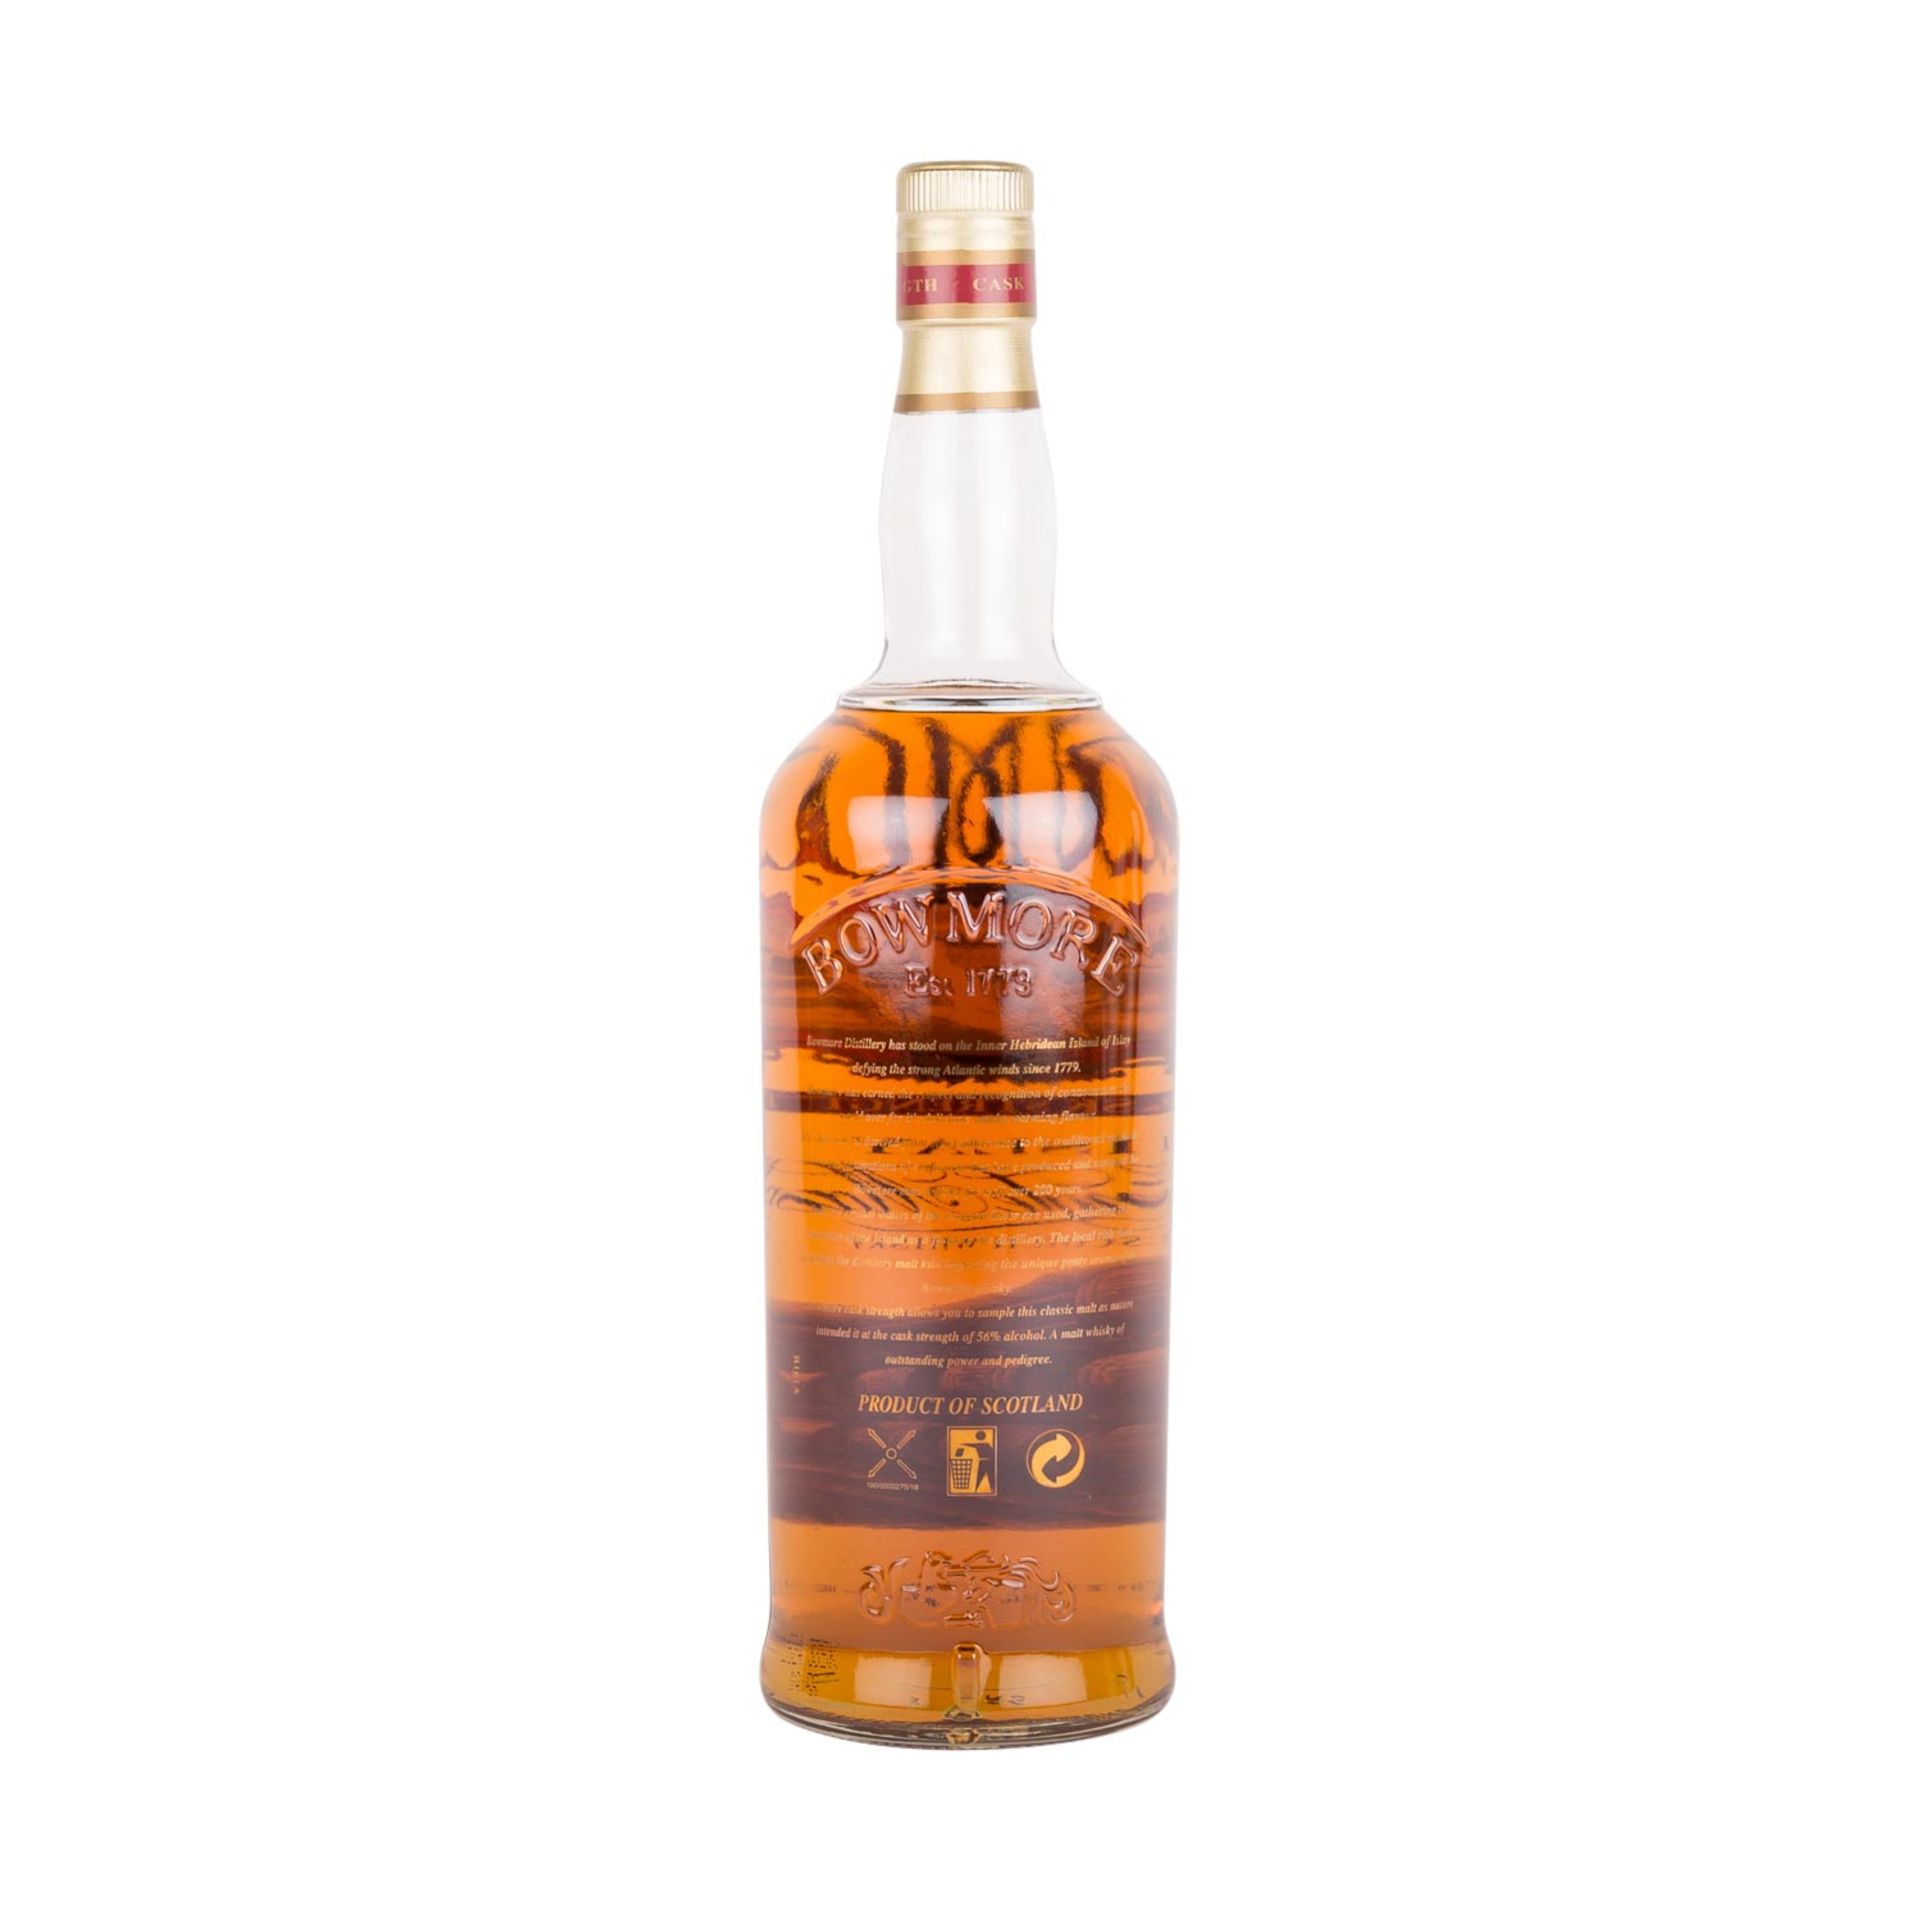 BOWMORE Single Malt Scotch Whisky 'CASK STRENGTH' - Image 3 of 5